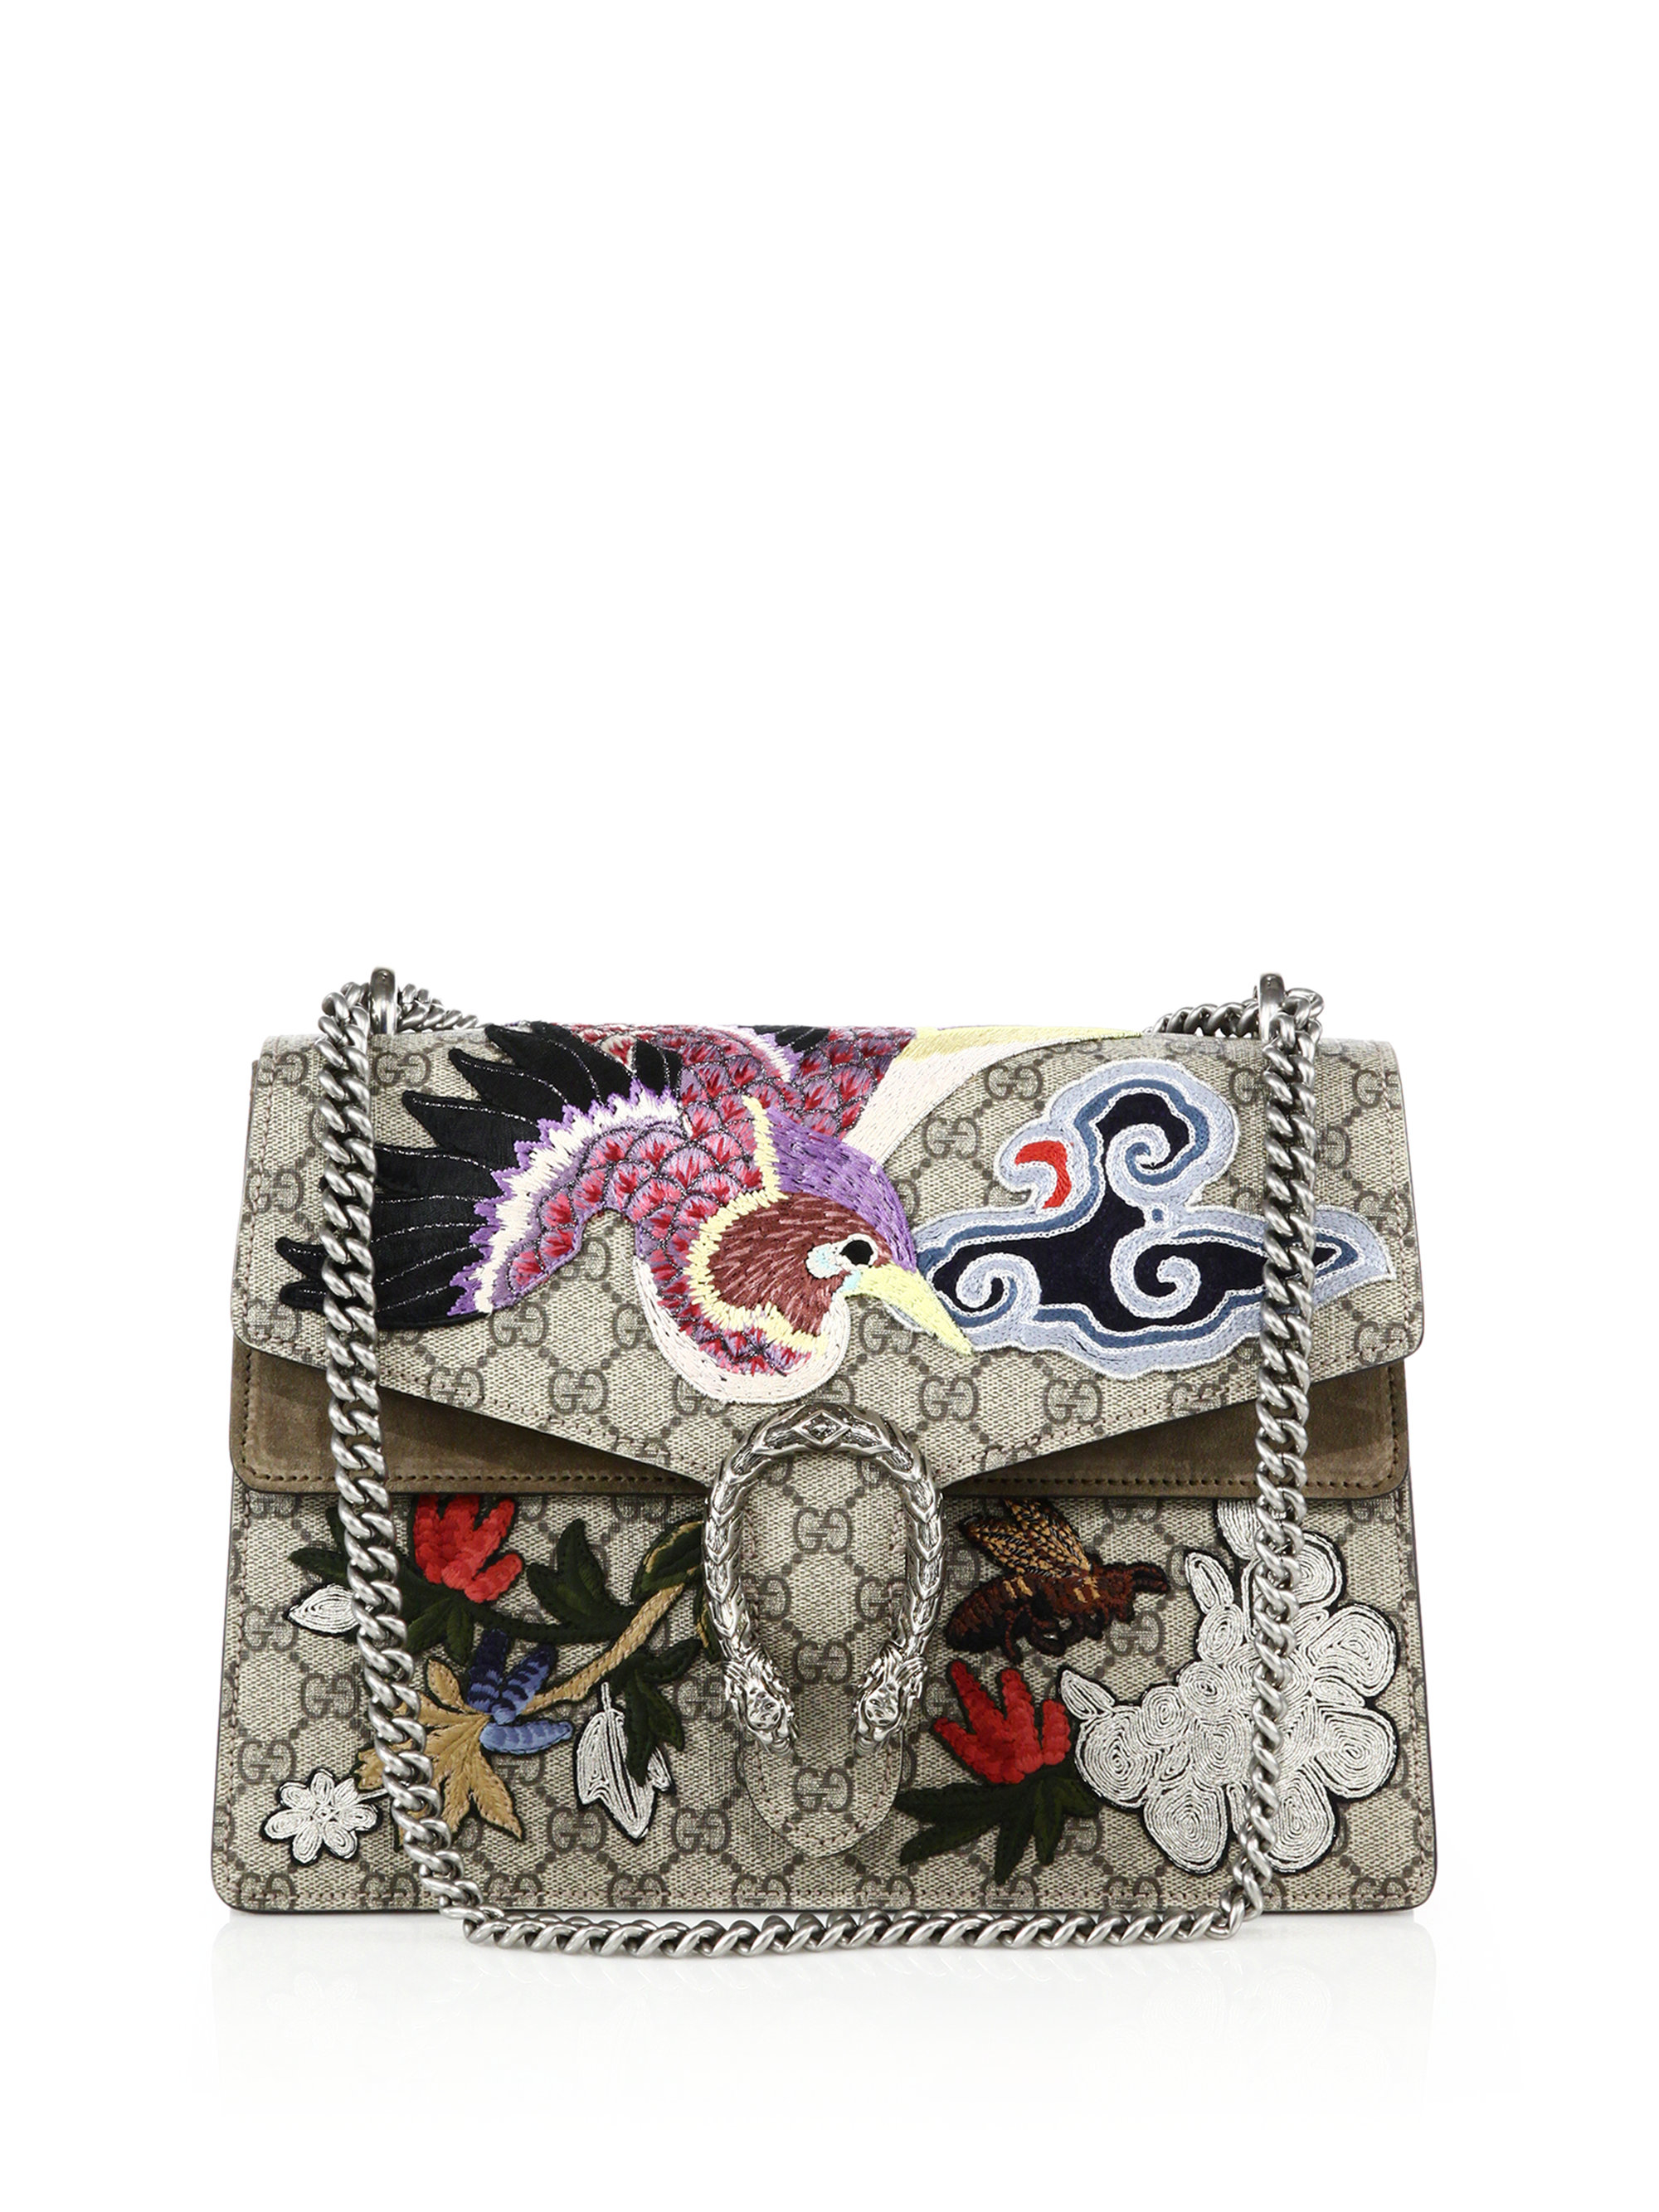 Lyst - Gucci Dionysus GG Supreme Embroidered Canvas Shoulder Bag